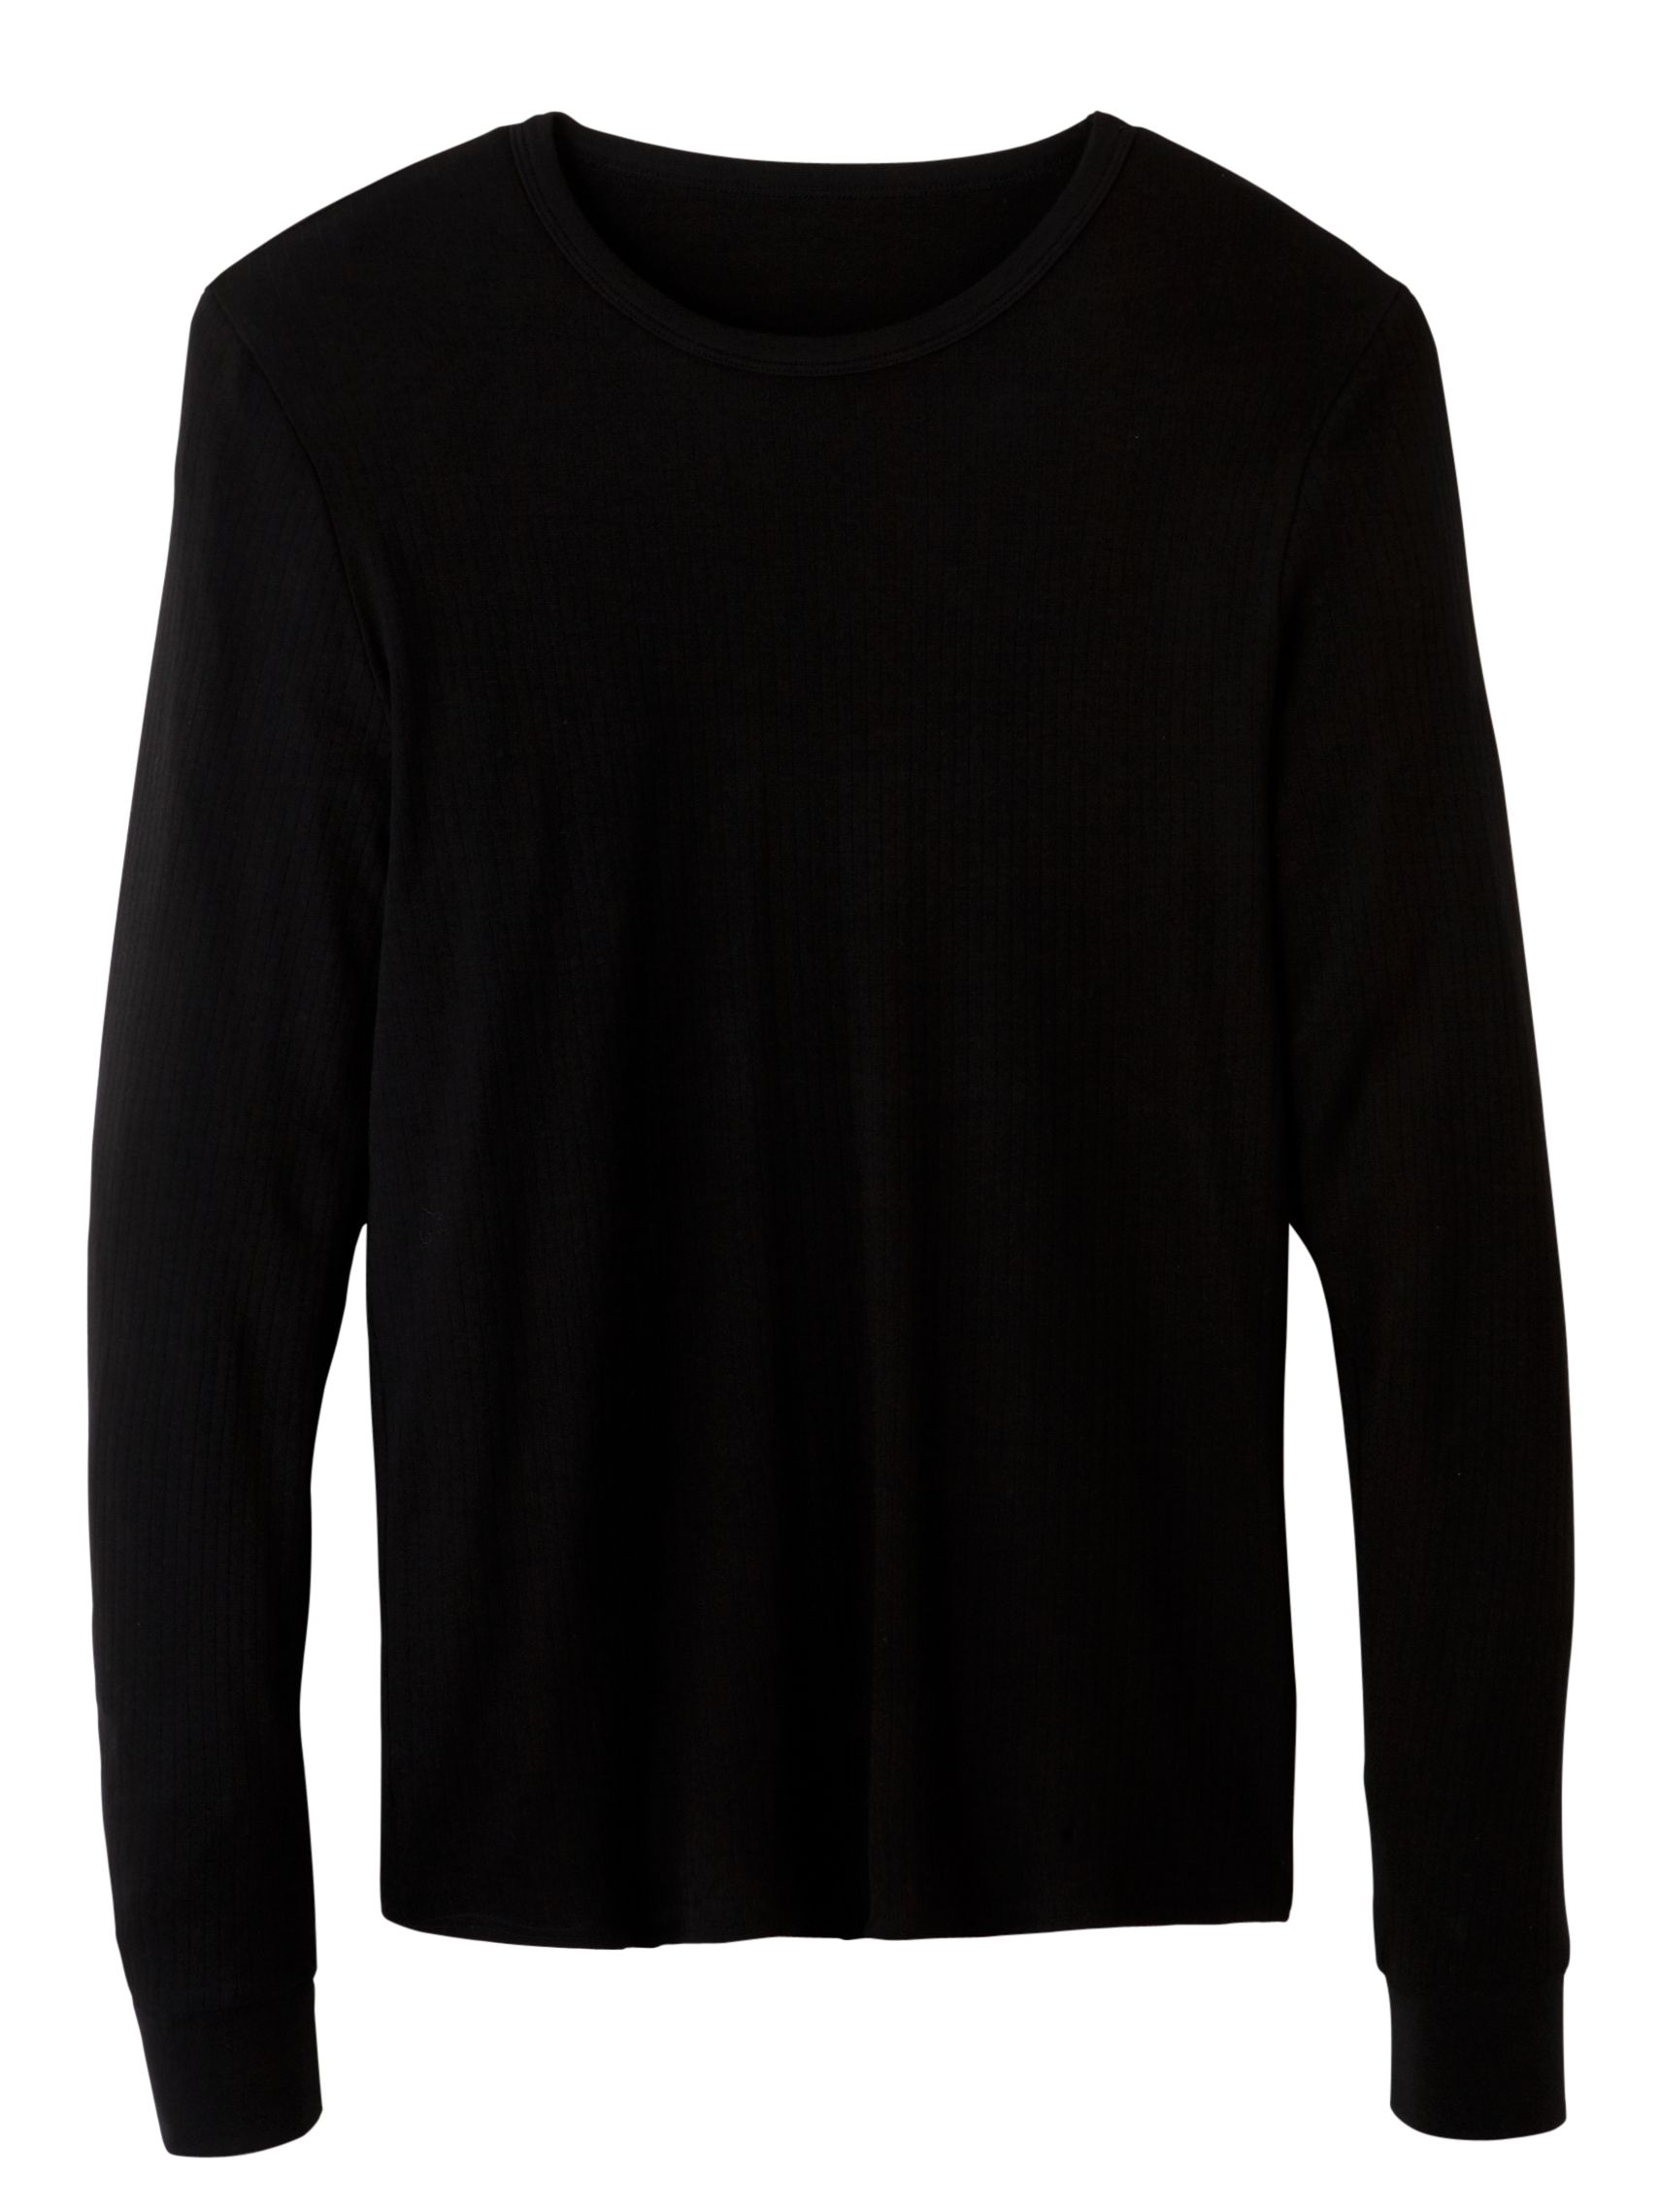 Thermal Long Sleeve T-Shirt, Black